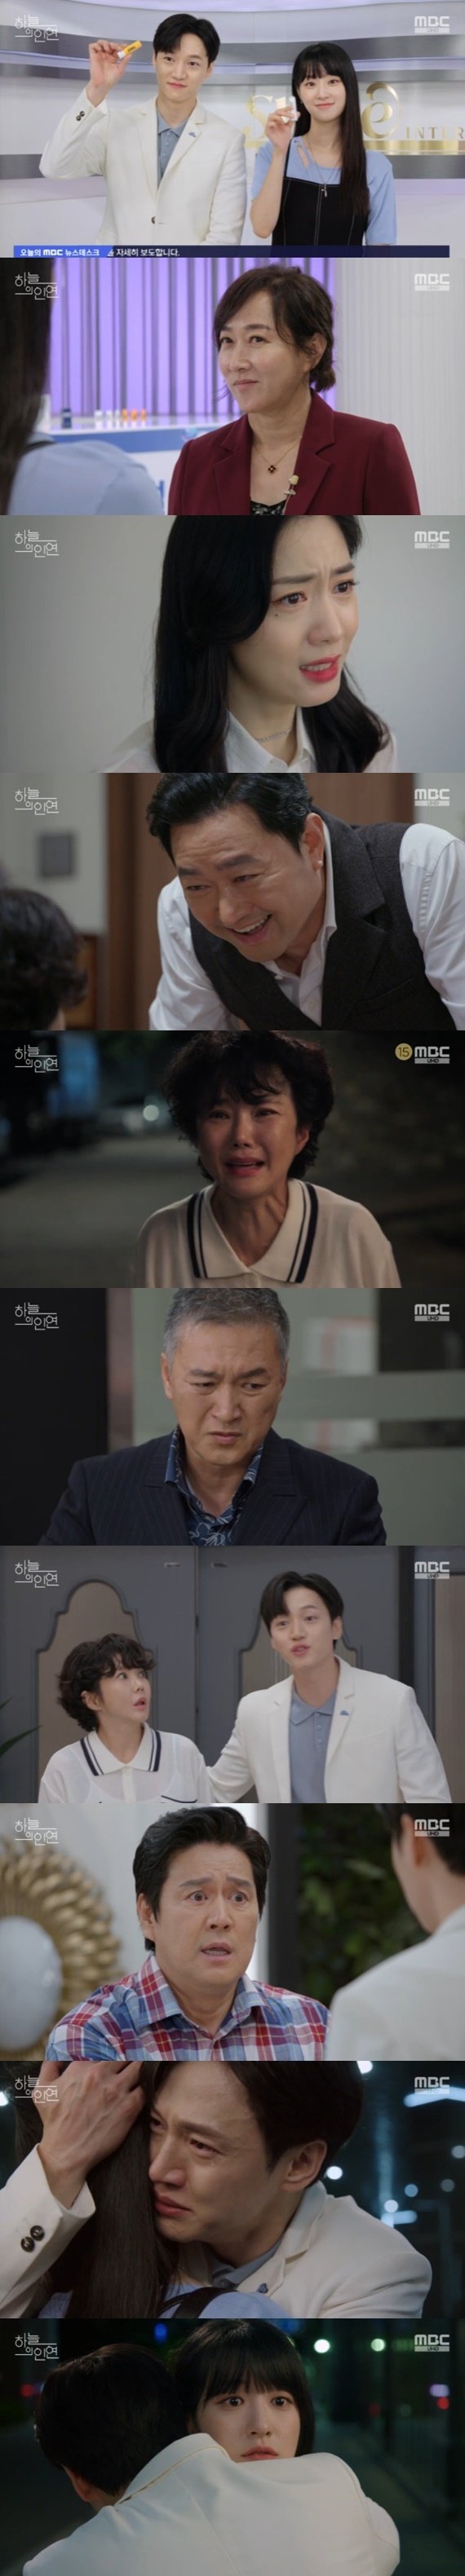 MBC '하늘의 인연' 캡처